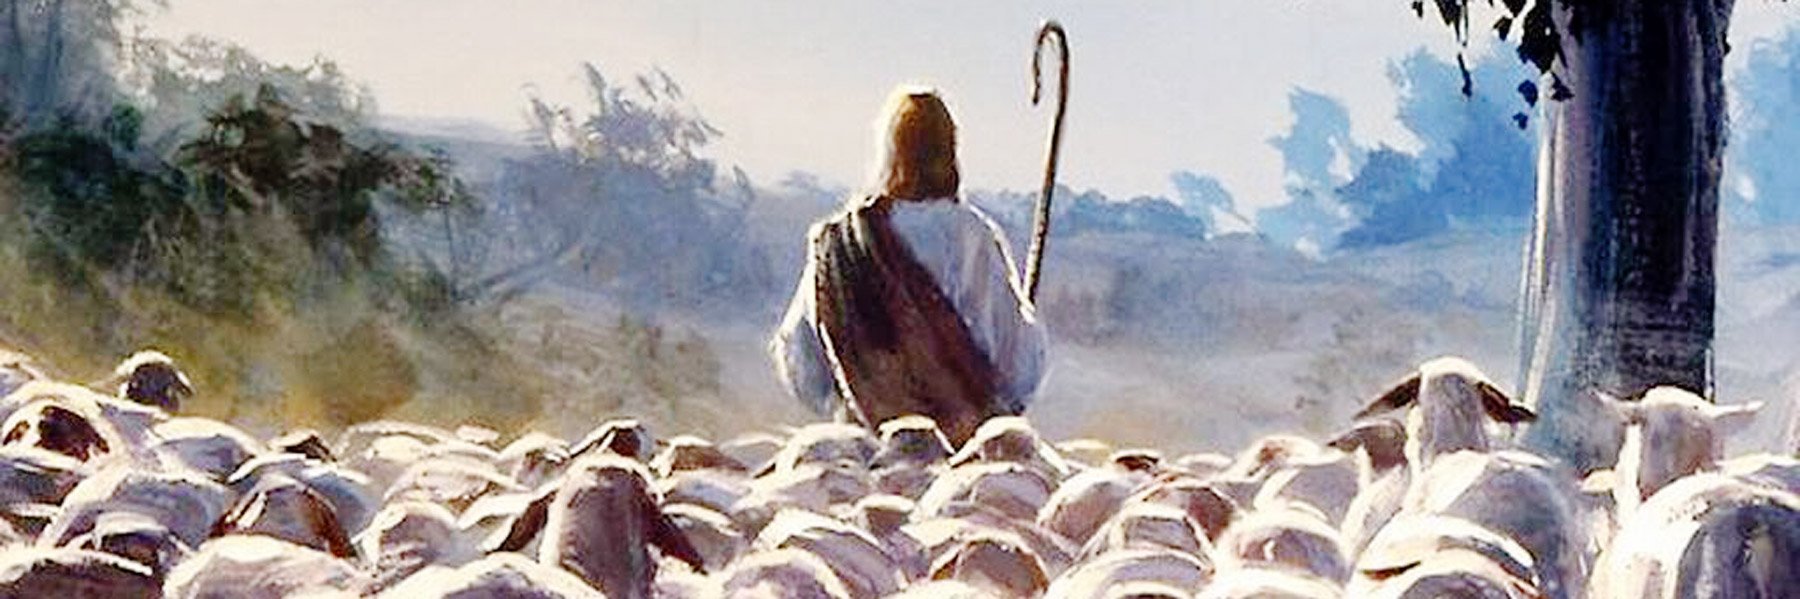 the shepherd trilogy